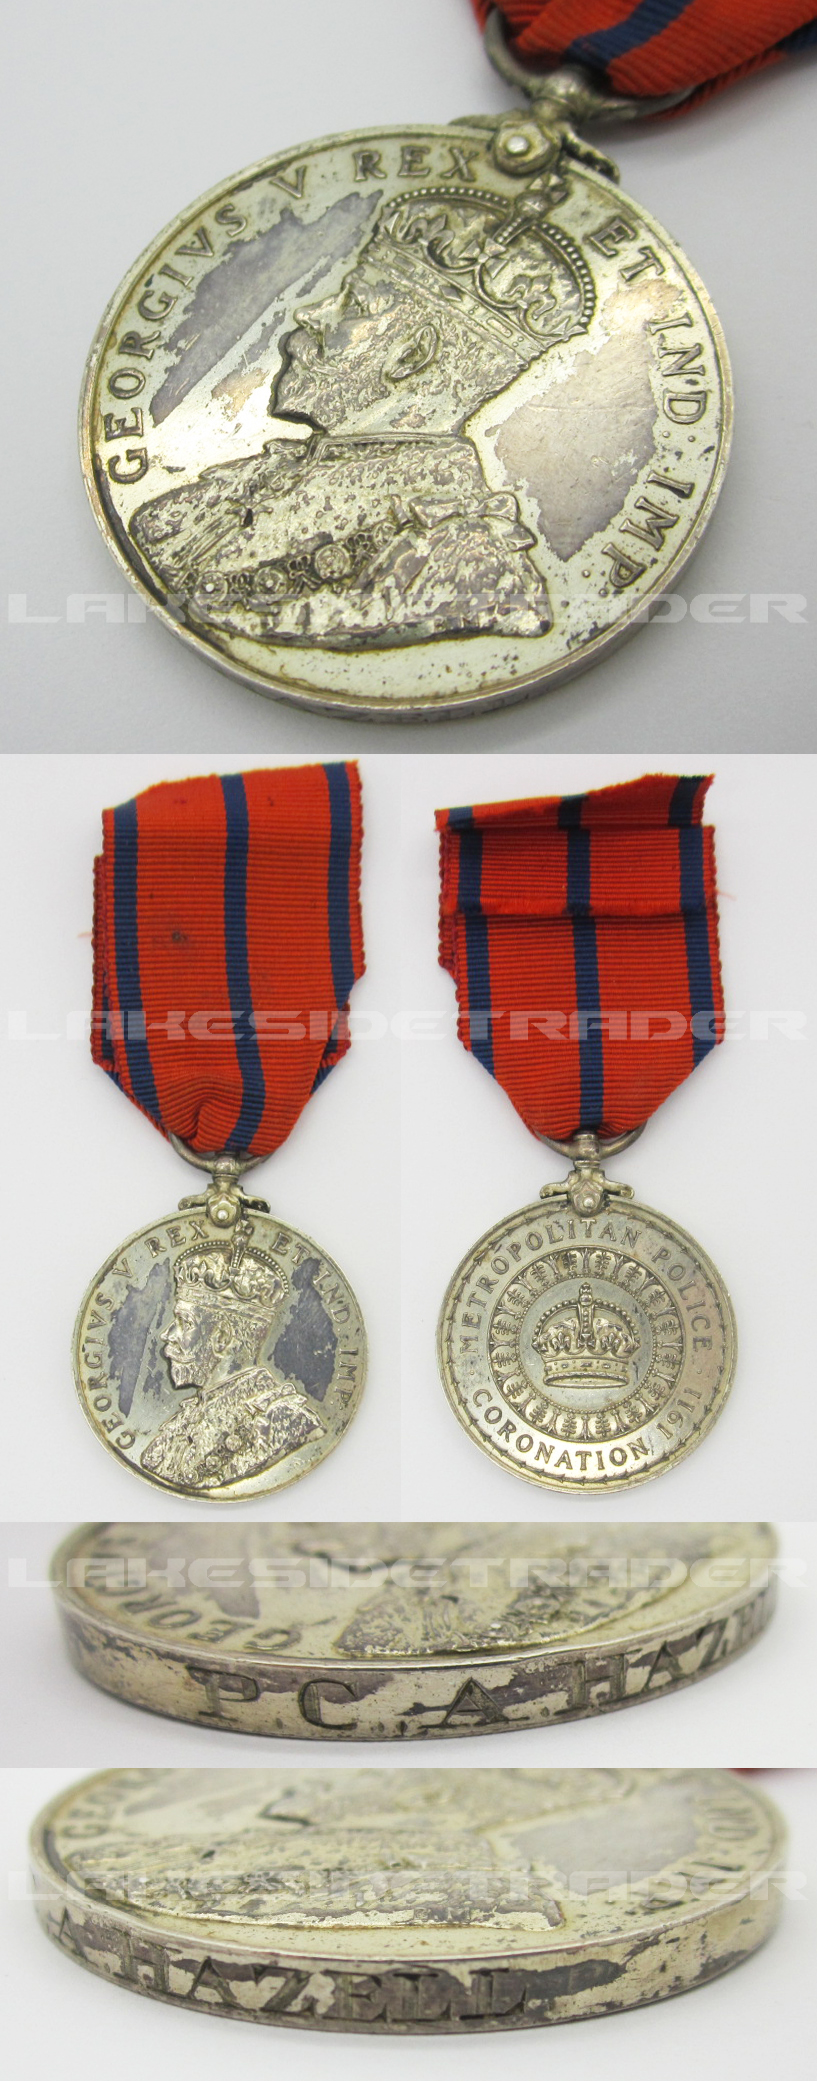 United Kingdom Metropolitan Police Coronation Medal 1911